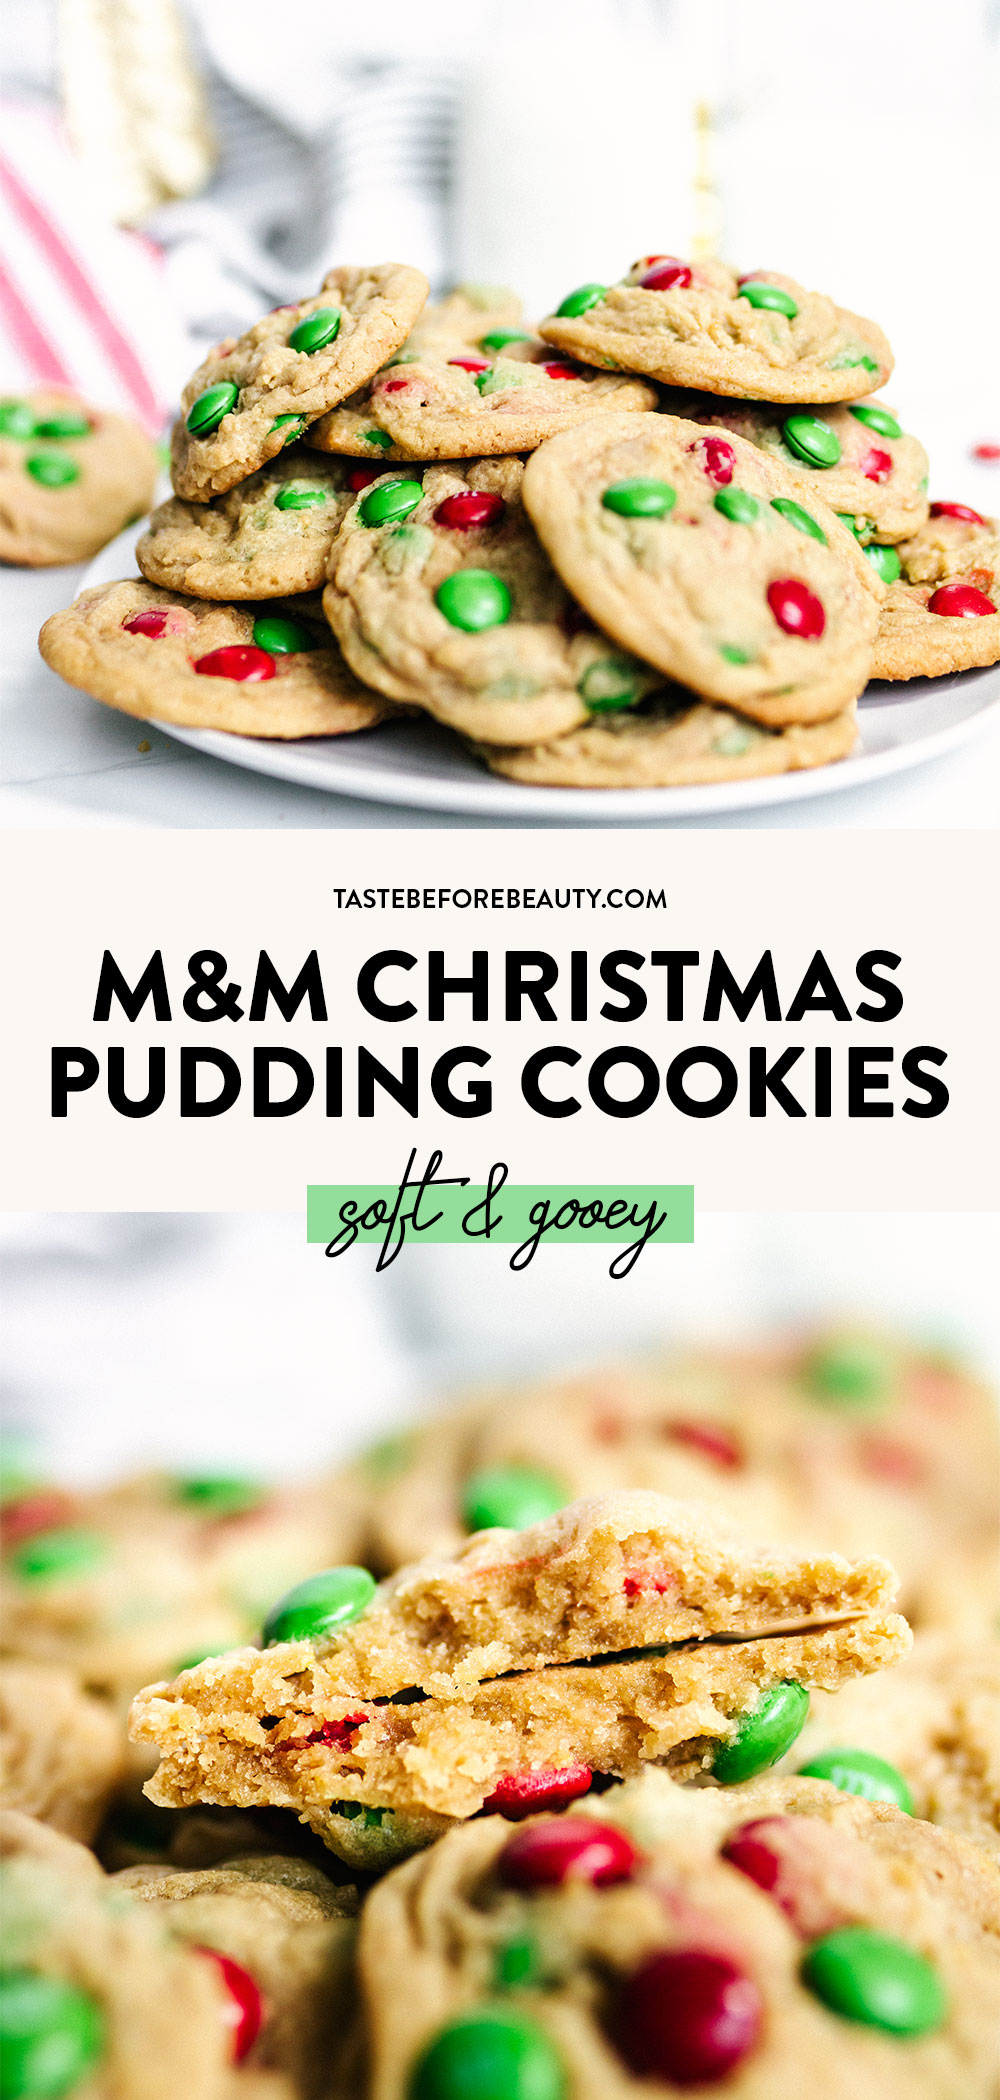 m&m christmas pudding cookies pinterest pin